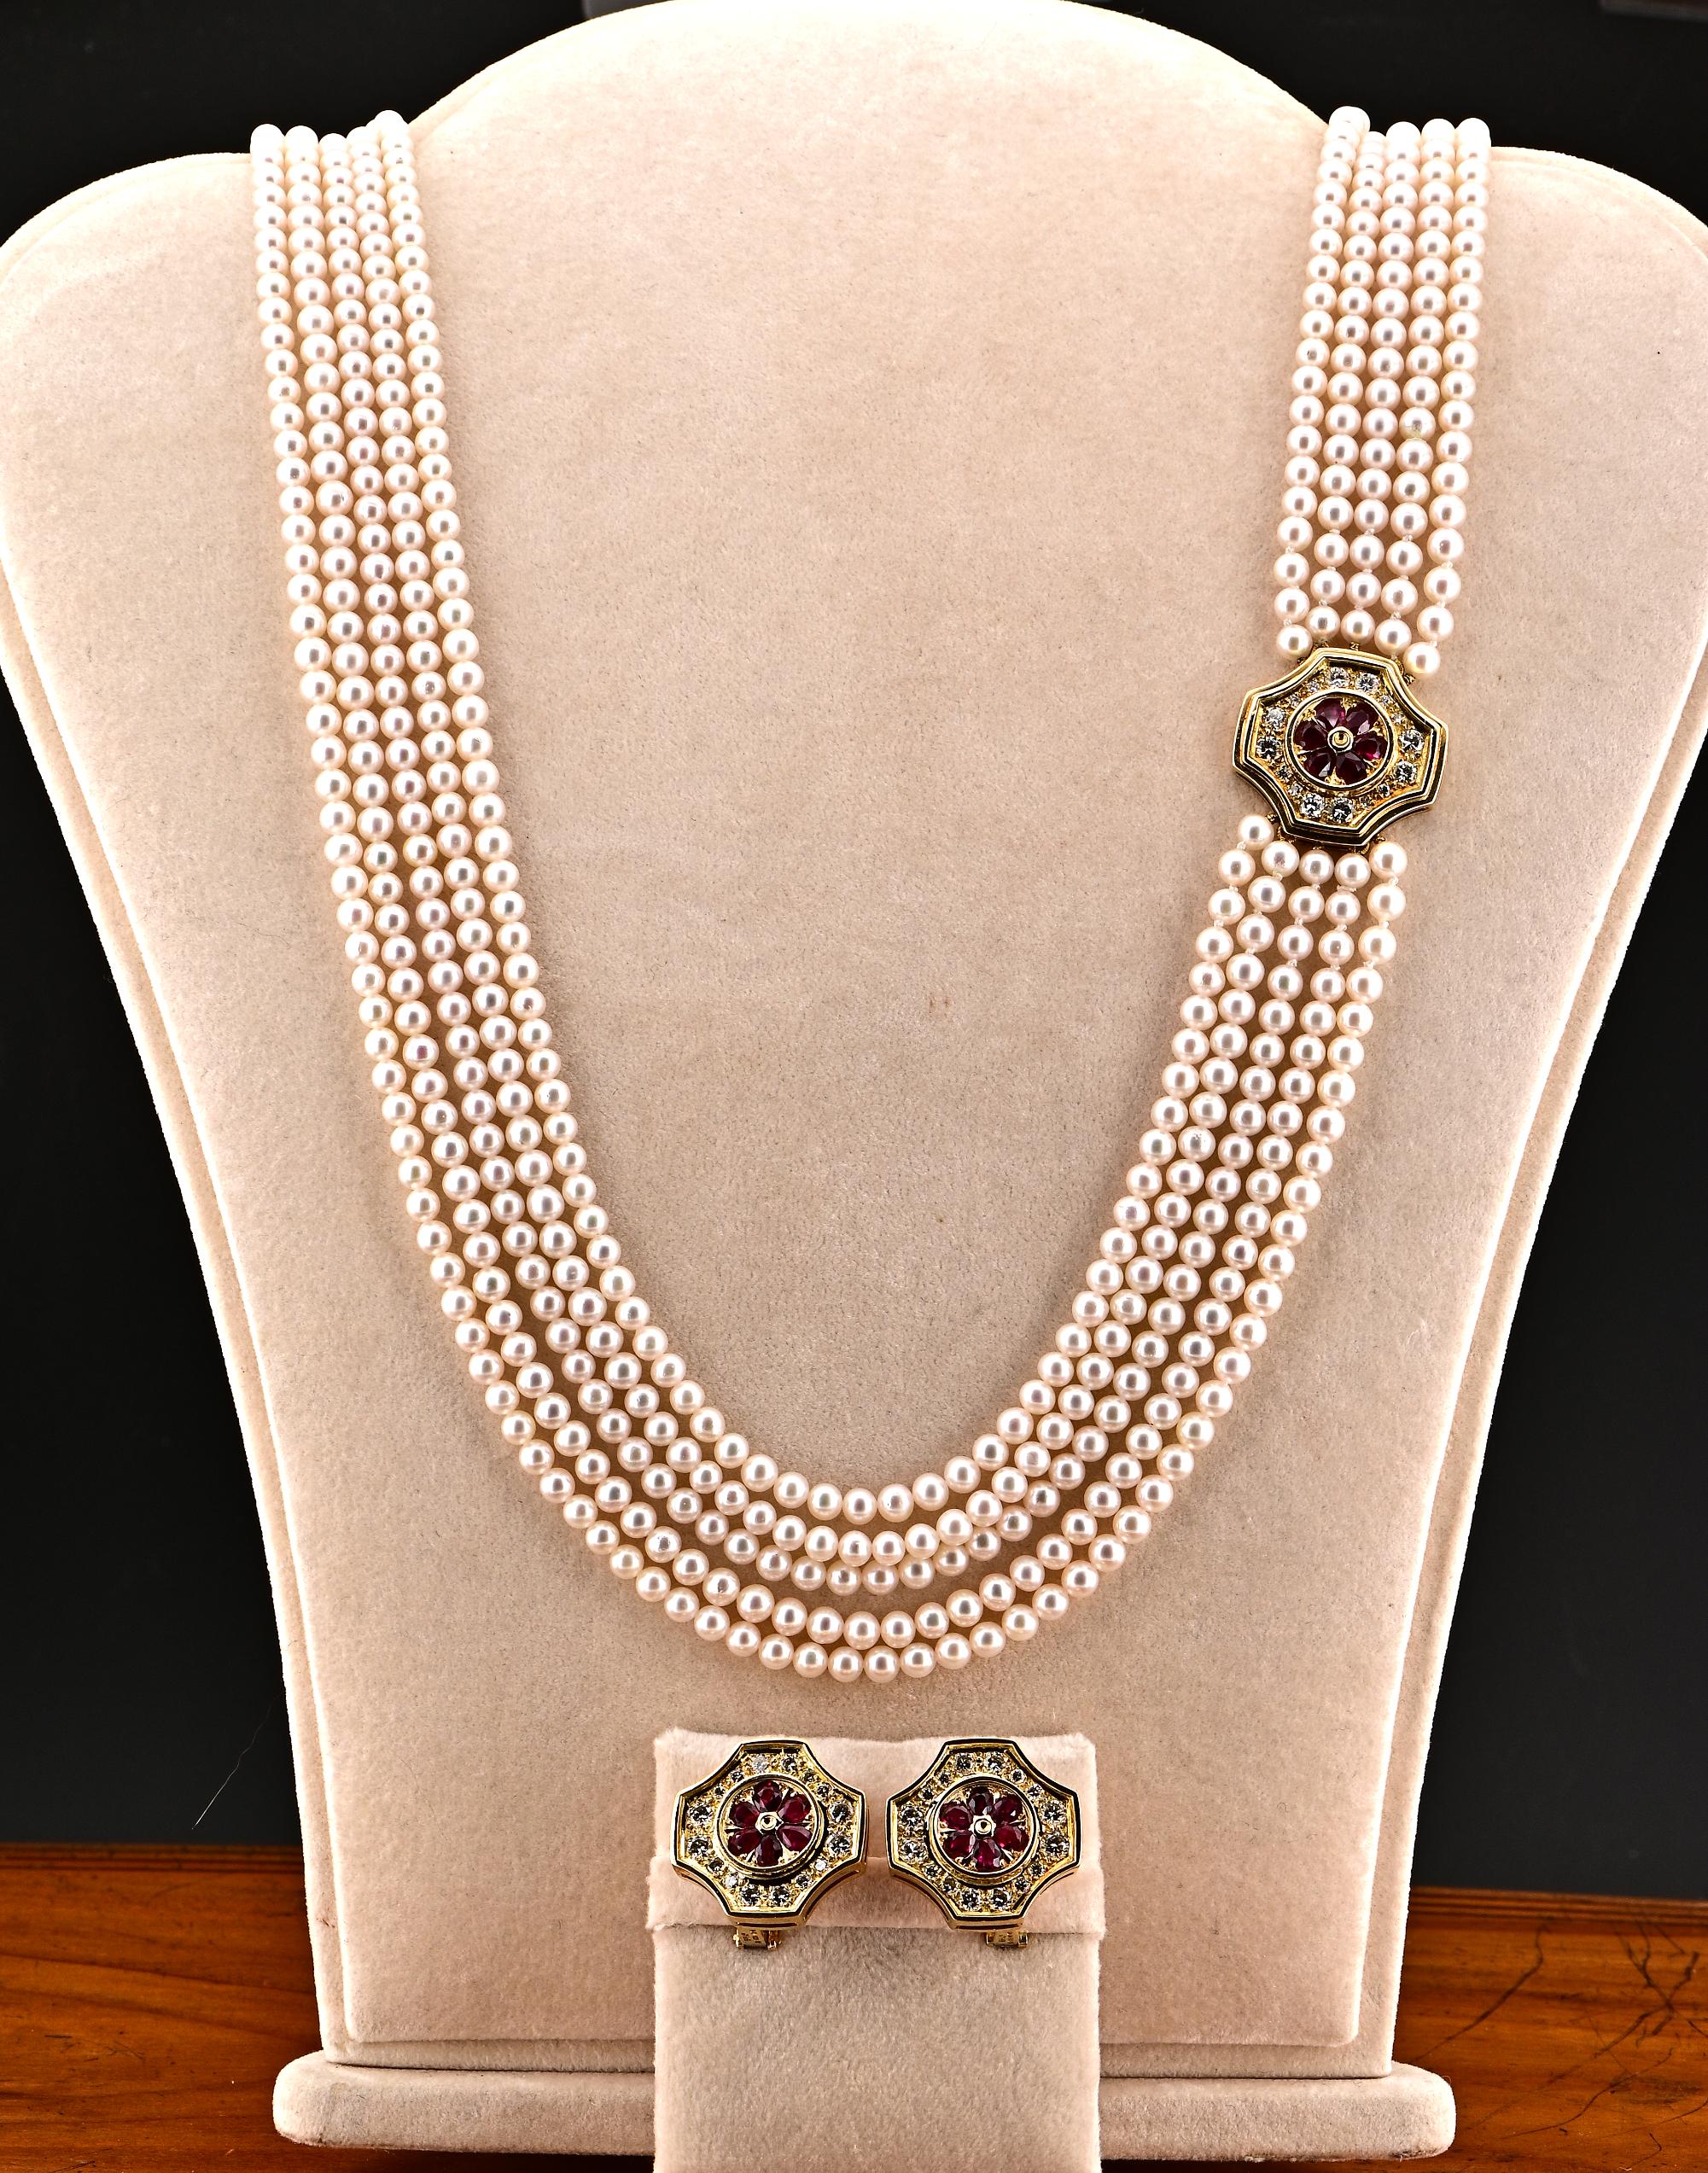 craftd london gemstone necklace